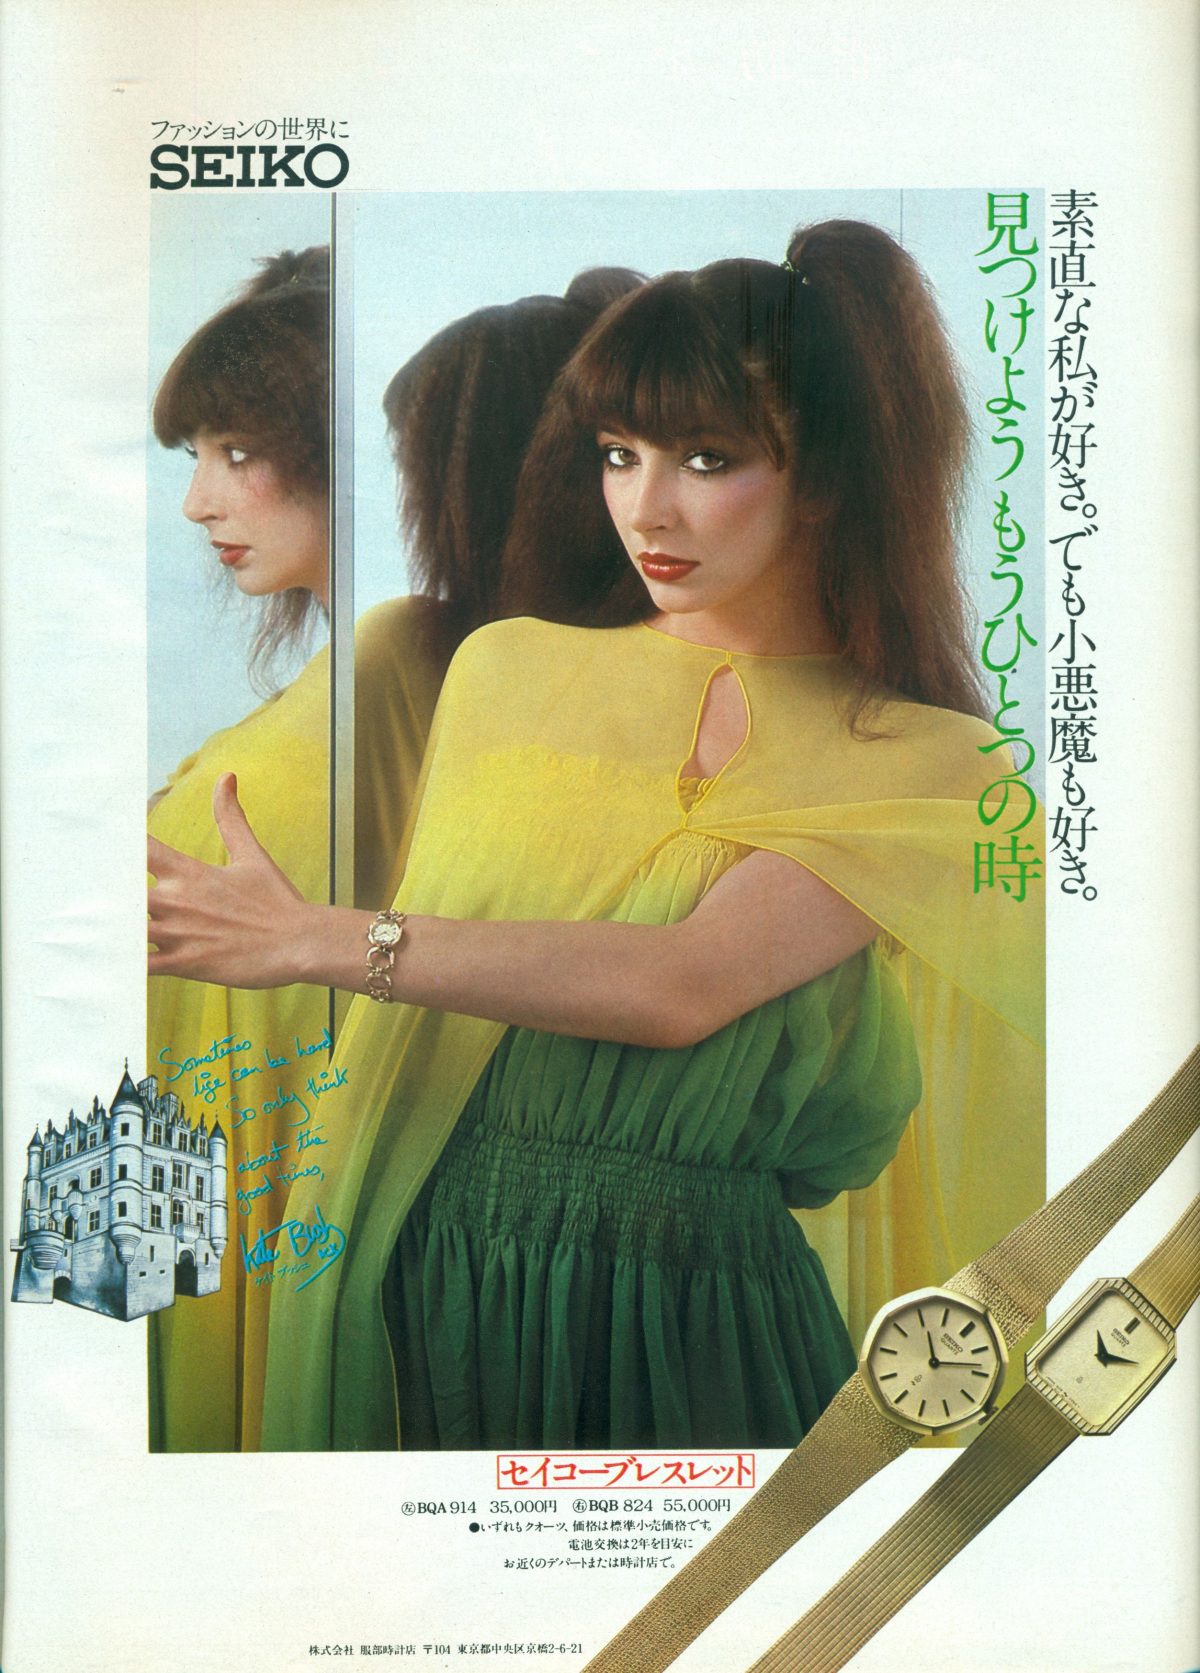 In 1978 Kate Bush Sold Seiko Watches in Japan - Flashbak